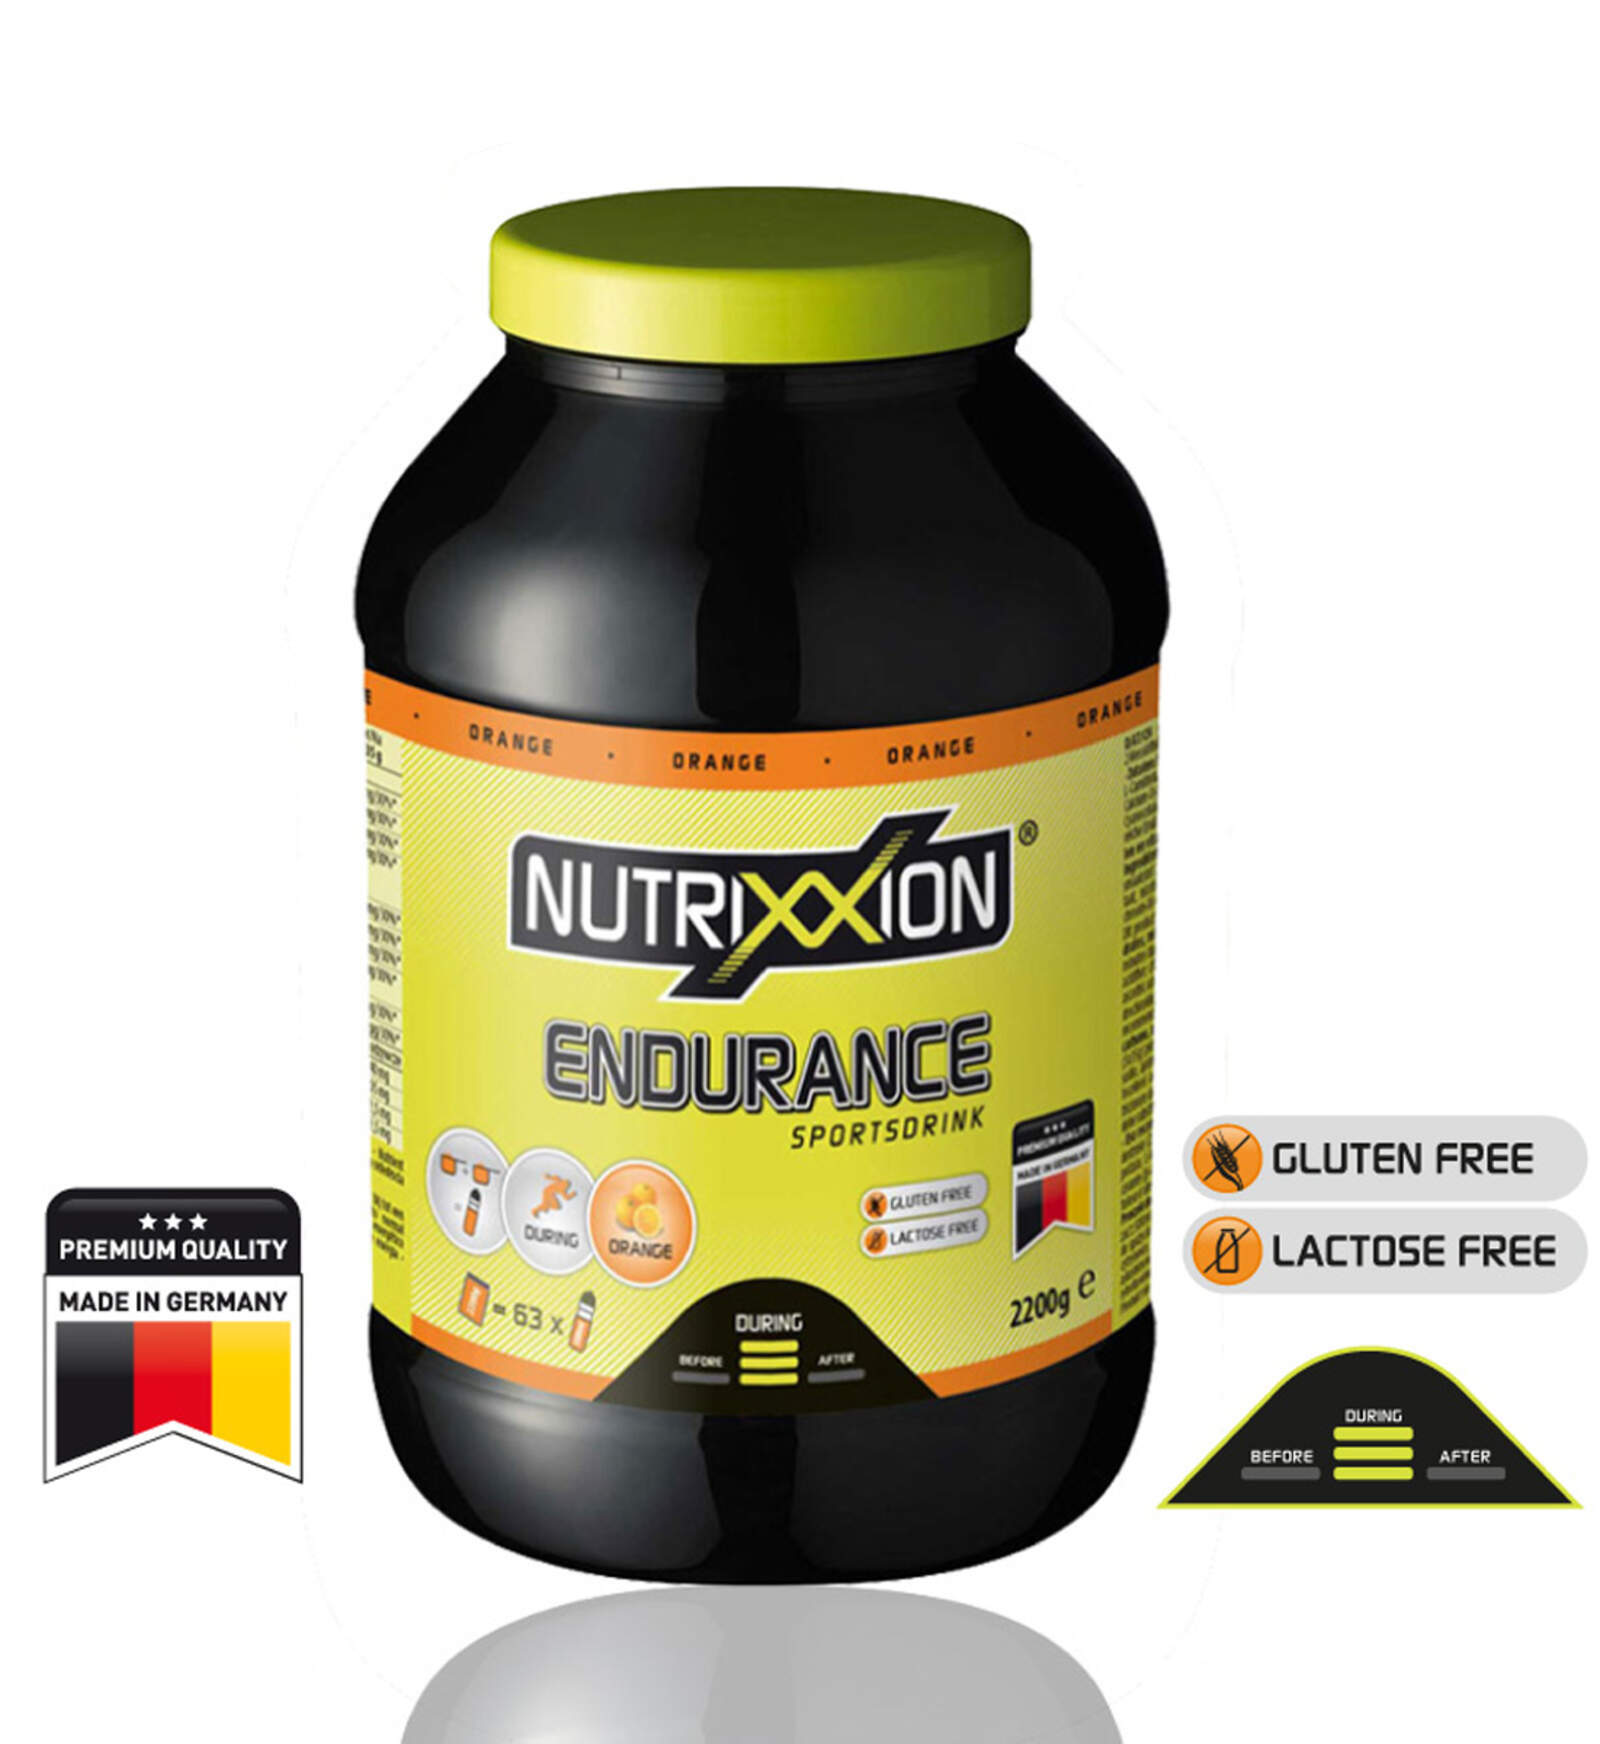 NUTRIXXION Energy Drink Endurance
Orange 2200g